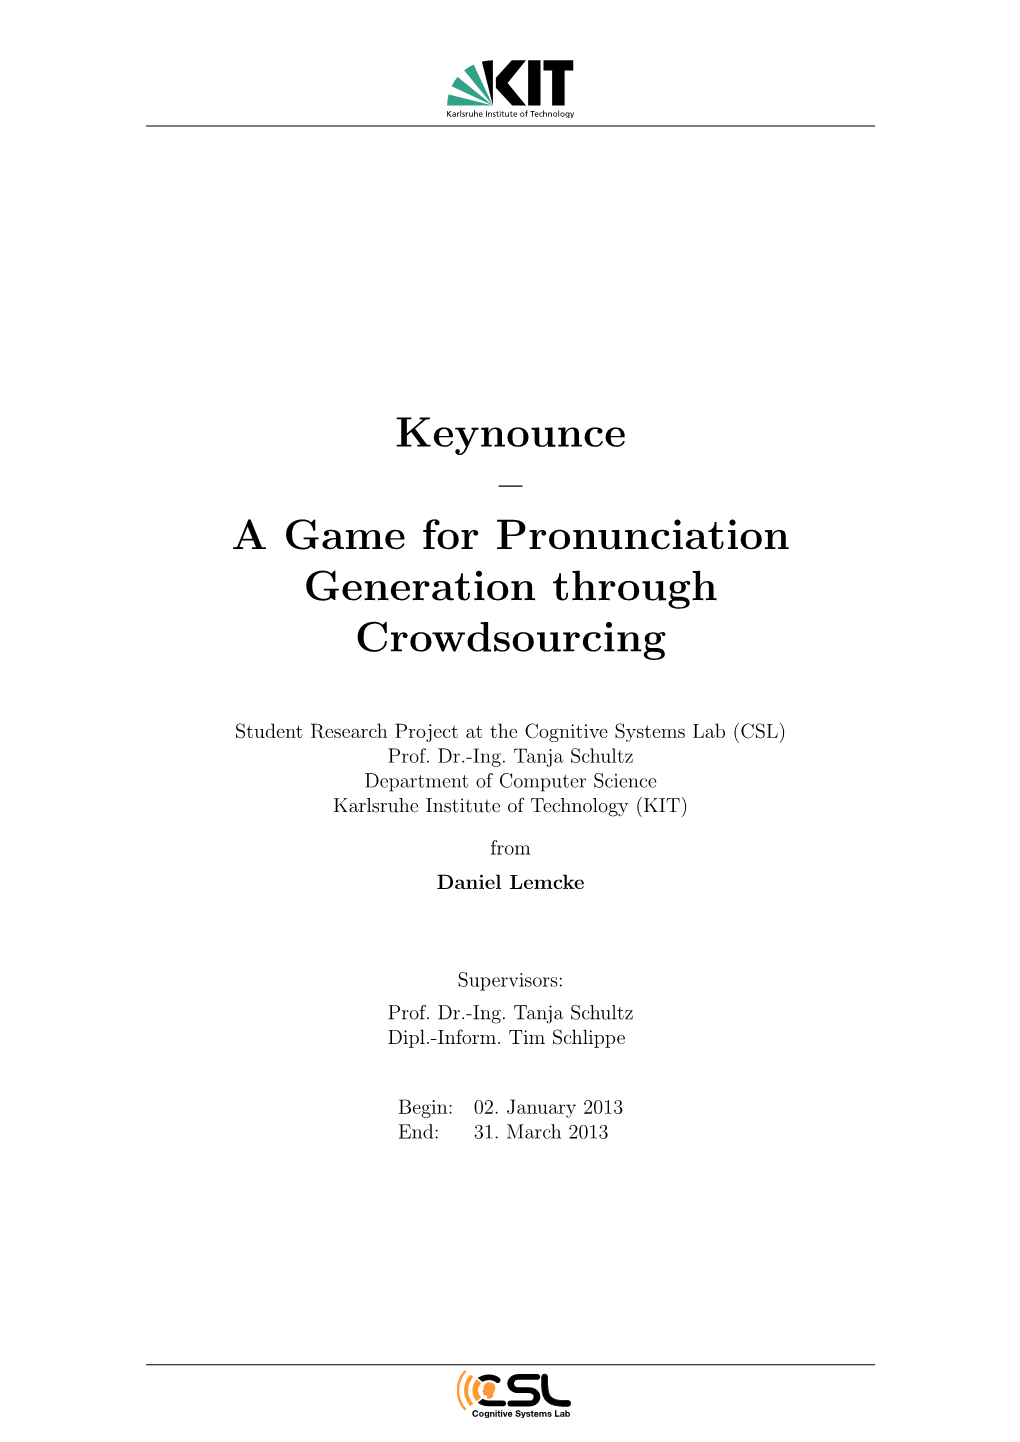 A Game for Pronunciation Generation Through Crowdsourcing